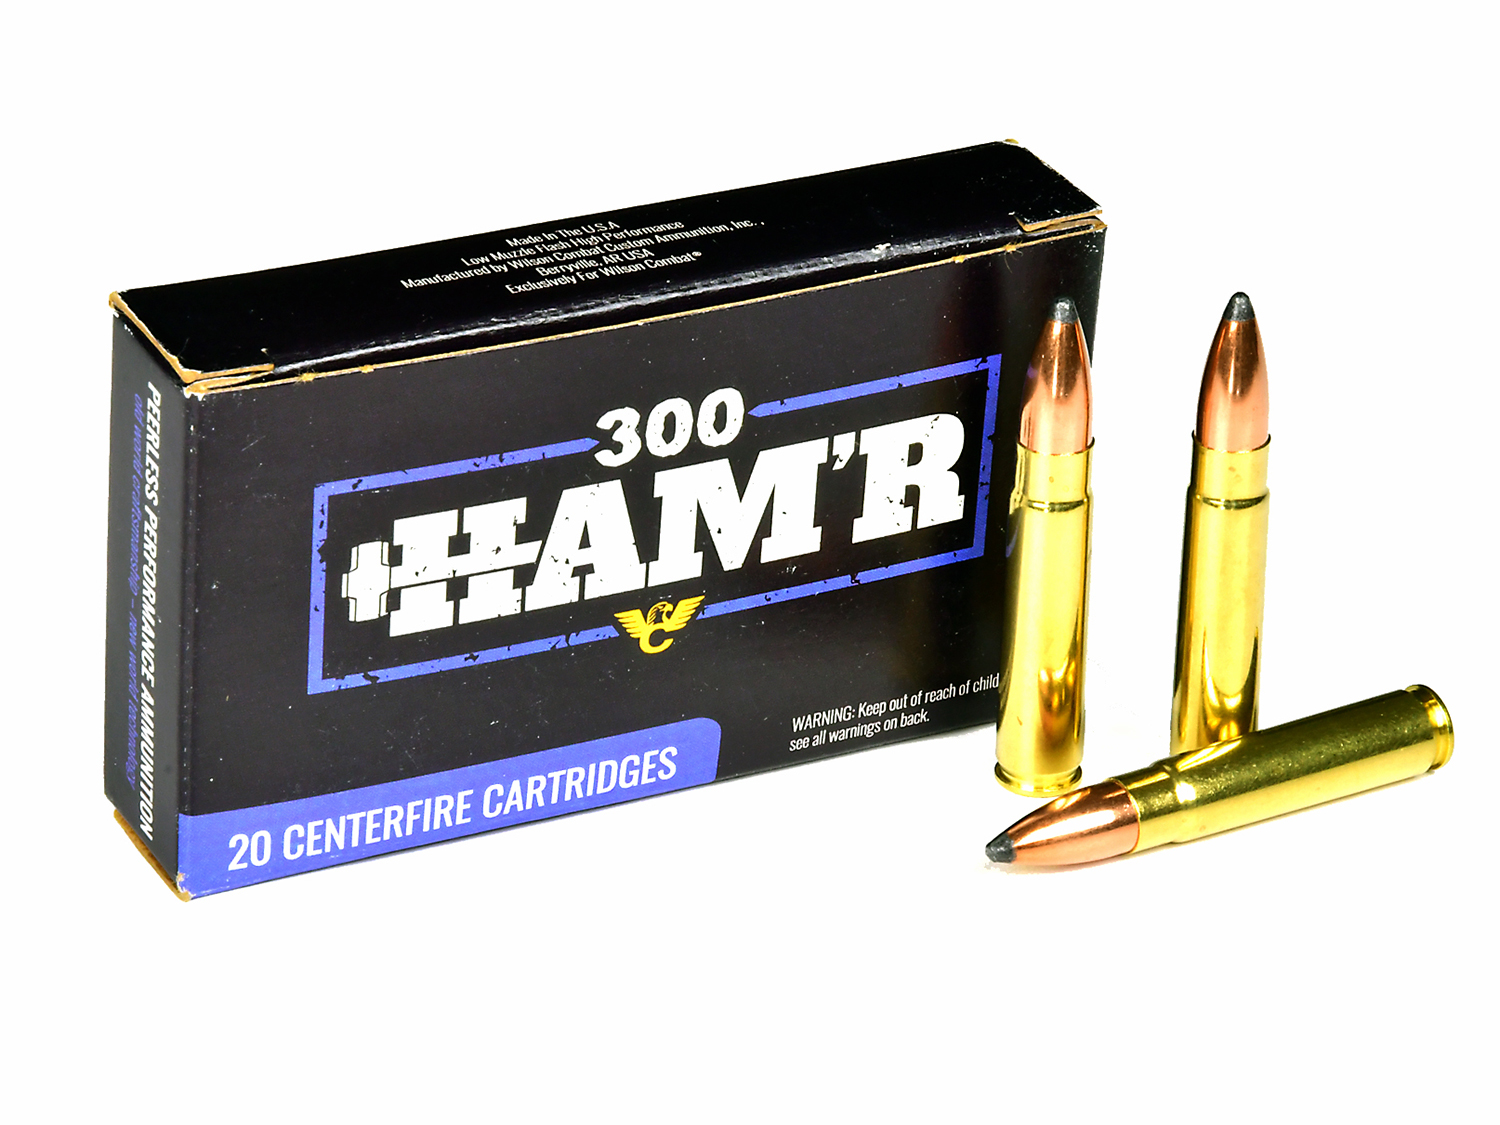 A box of 300 Ham'r centerfire rifle ammo cartridges.